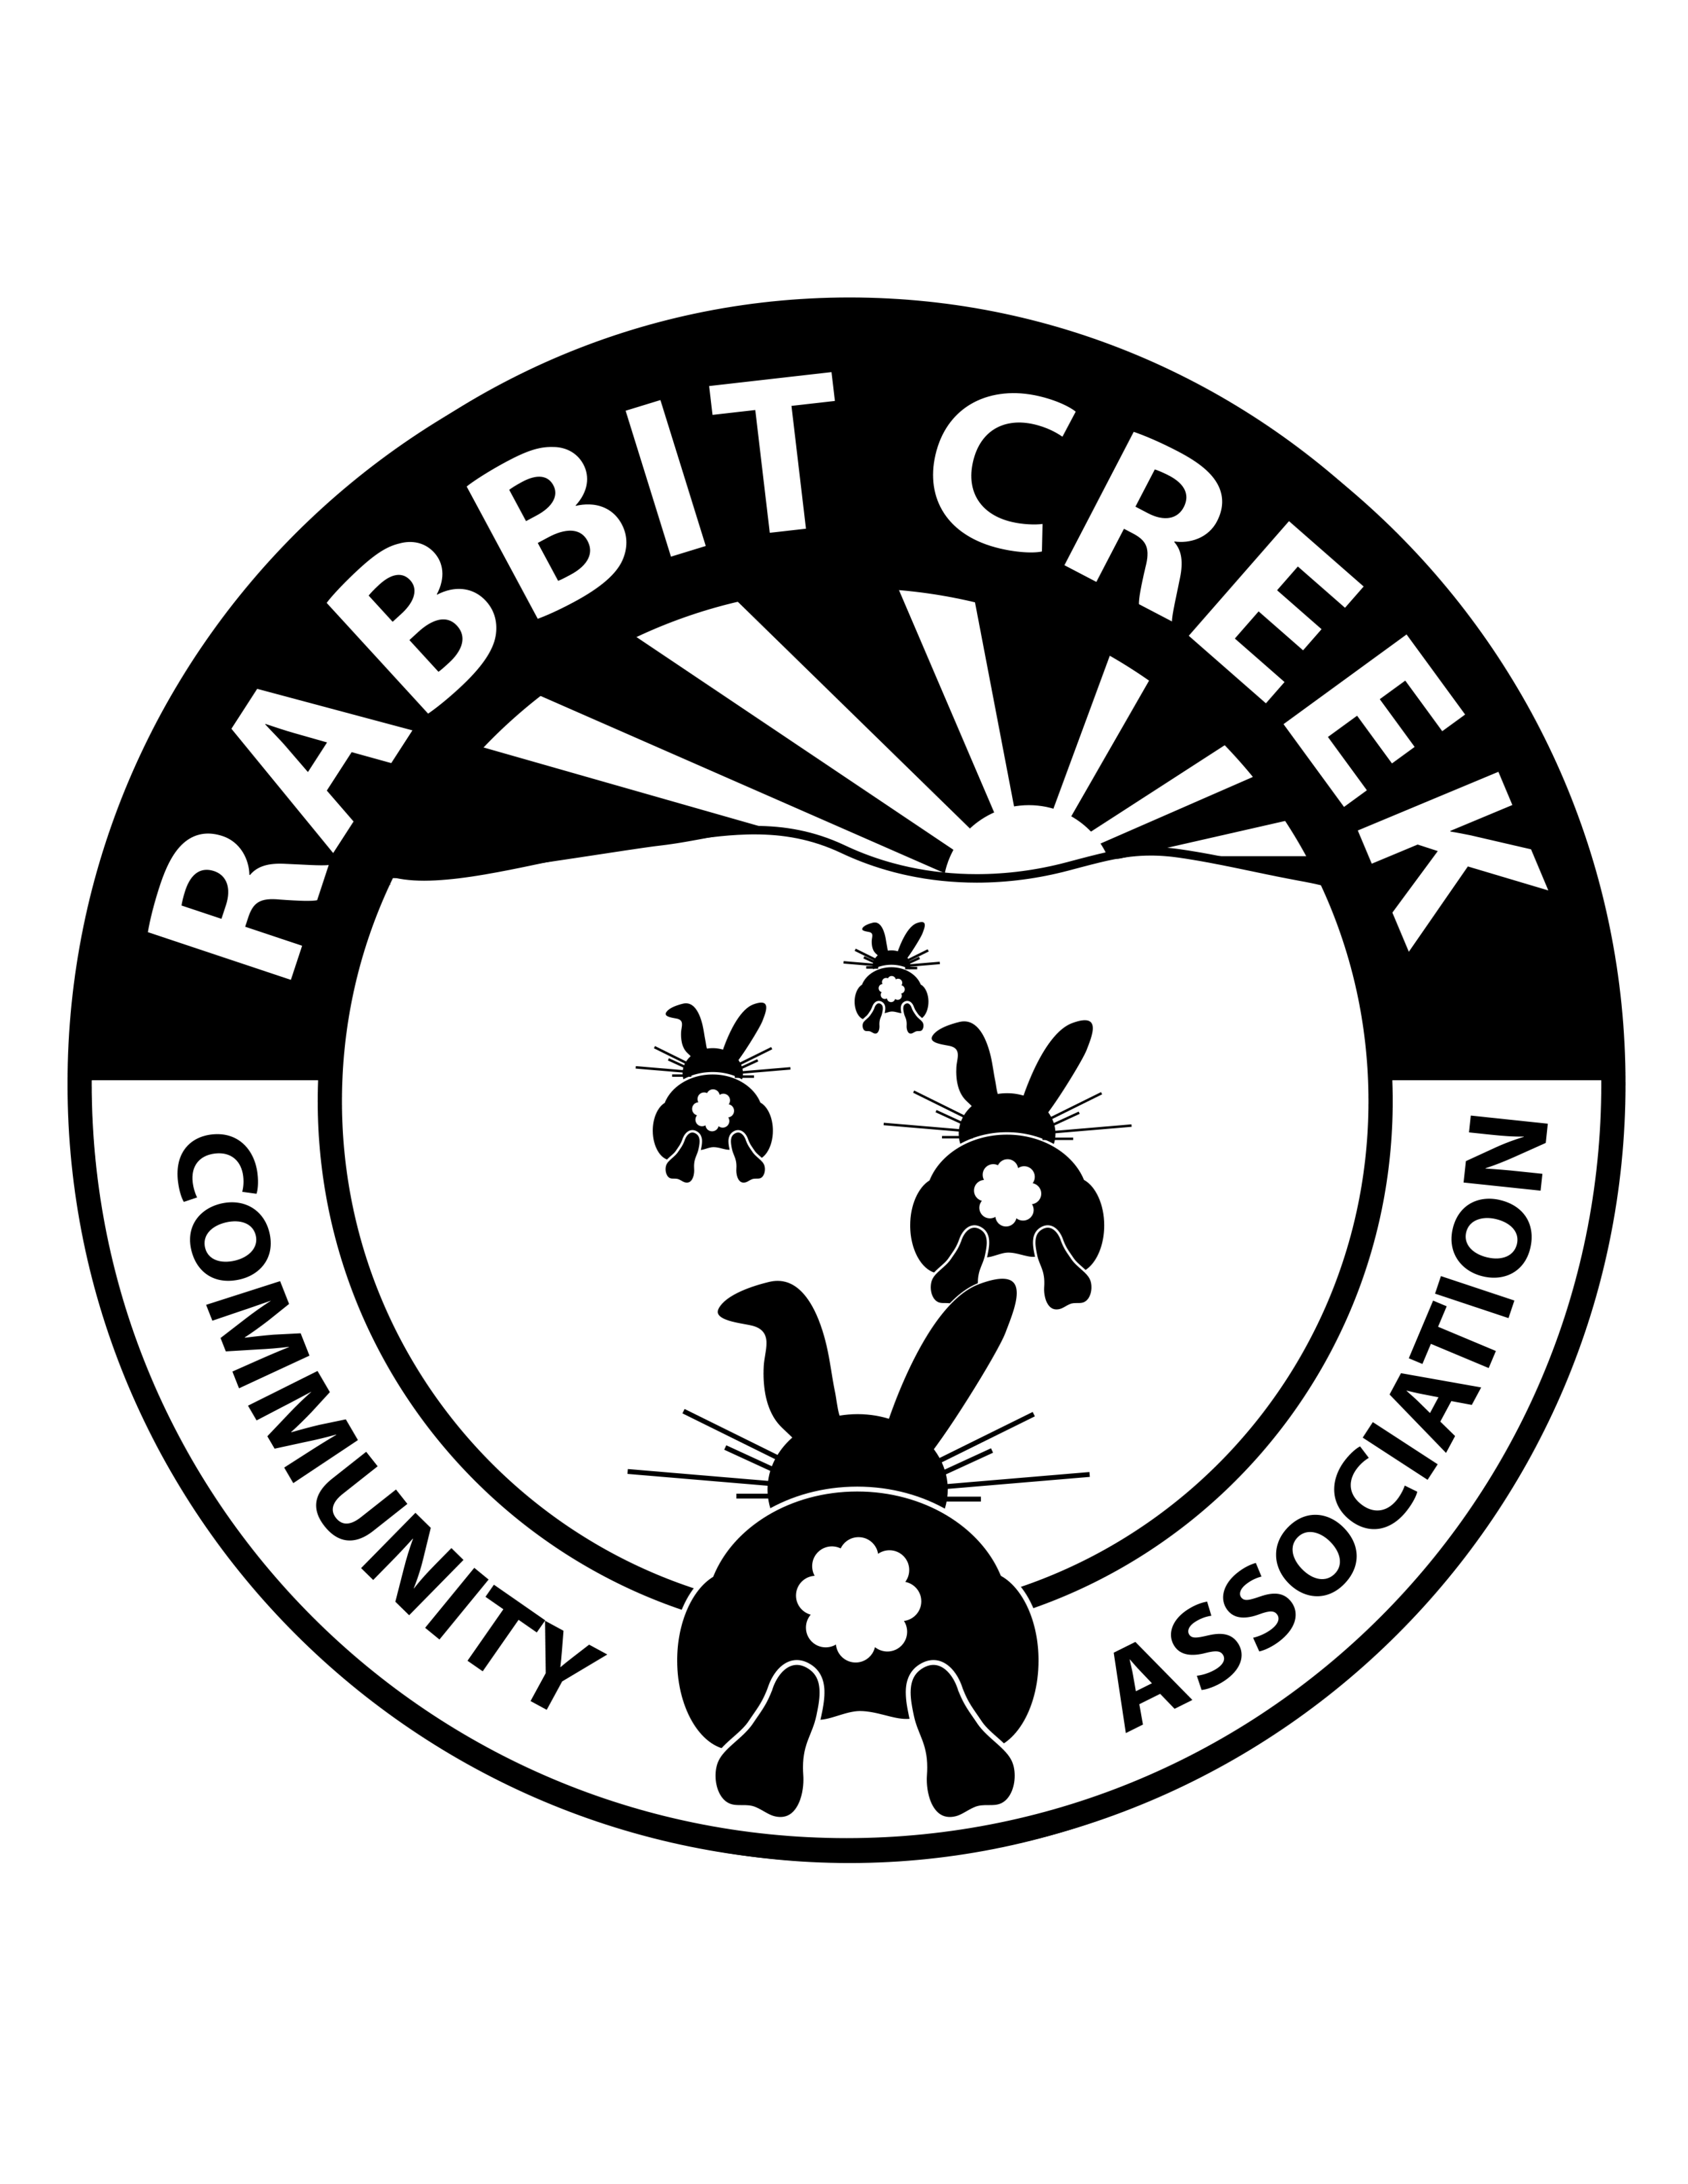 Rabbit Creek Community Association